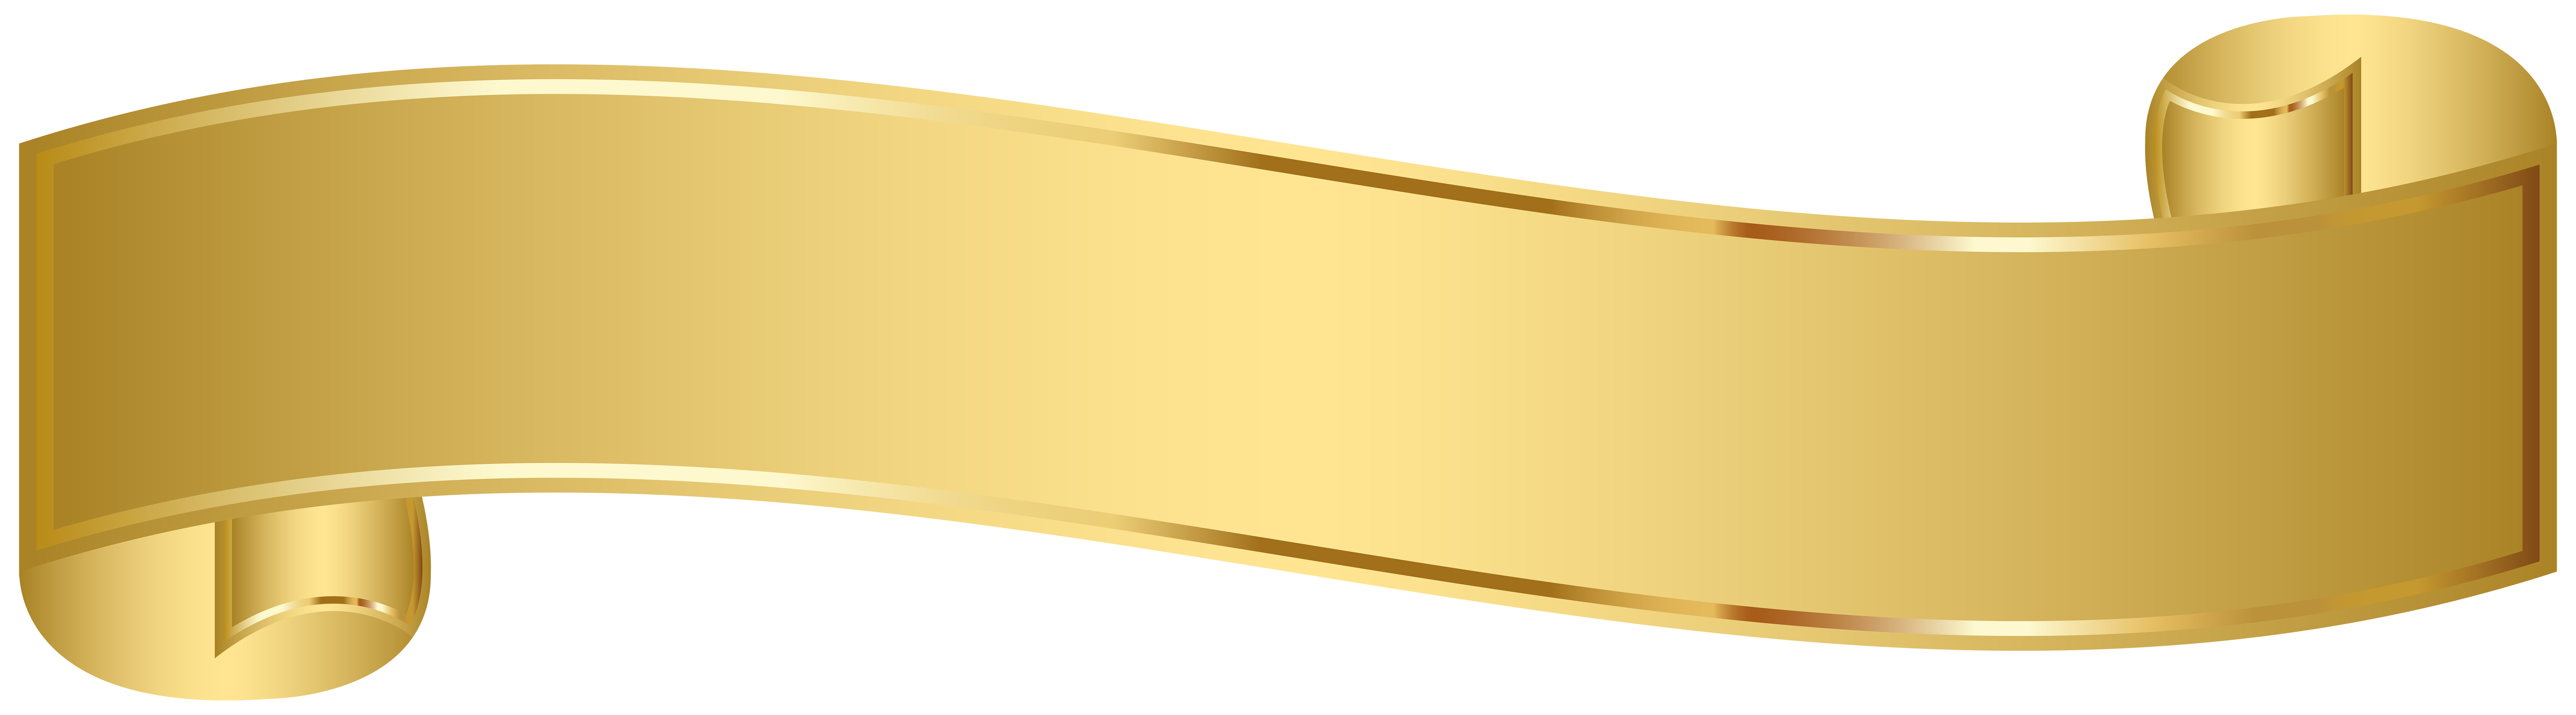 Banner de oro imagen Transparente